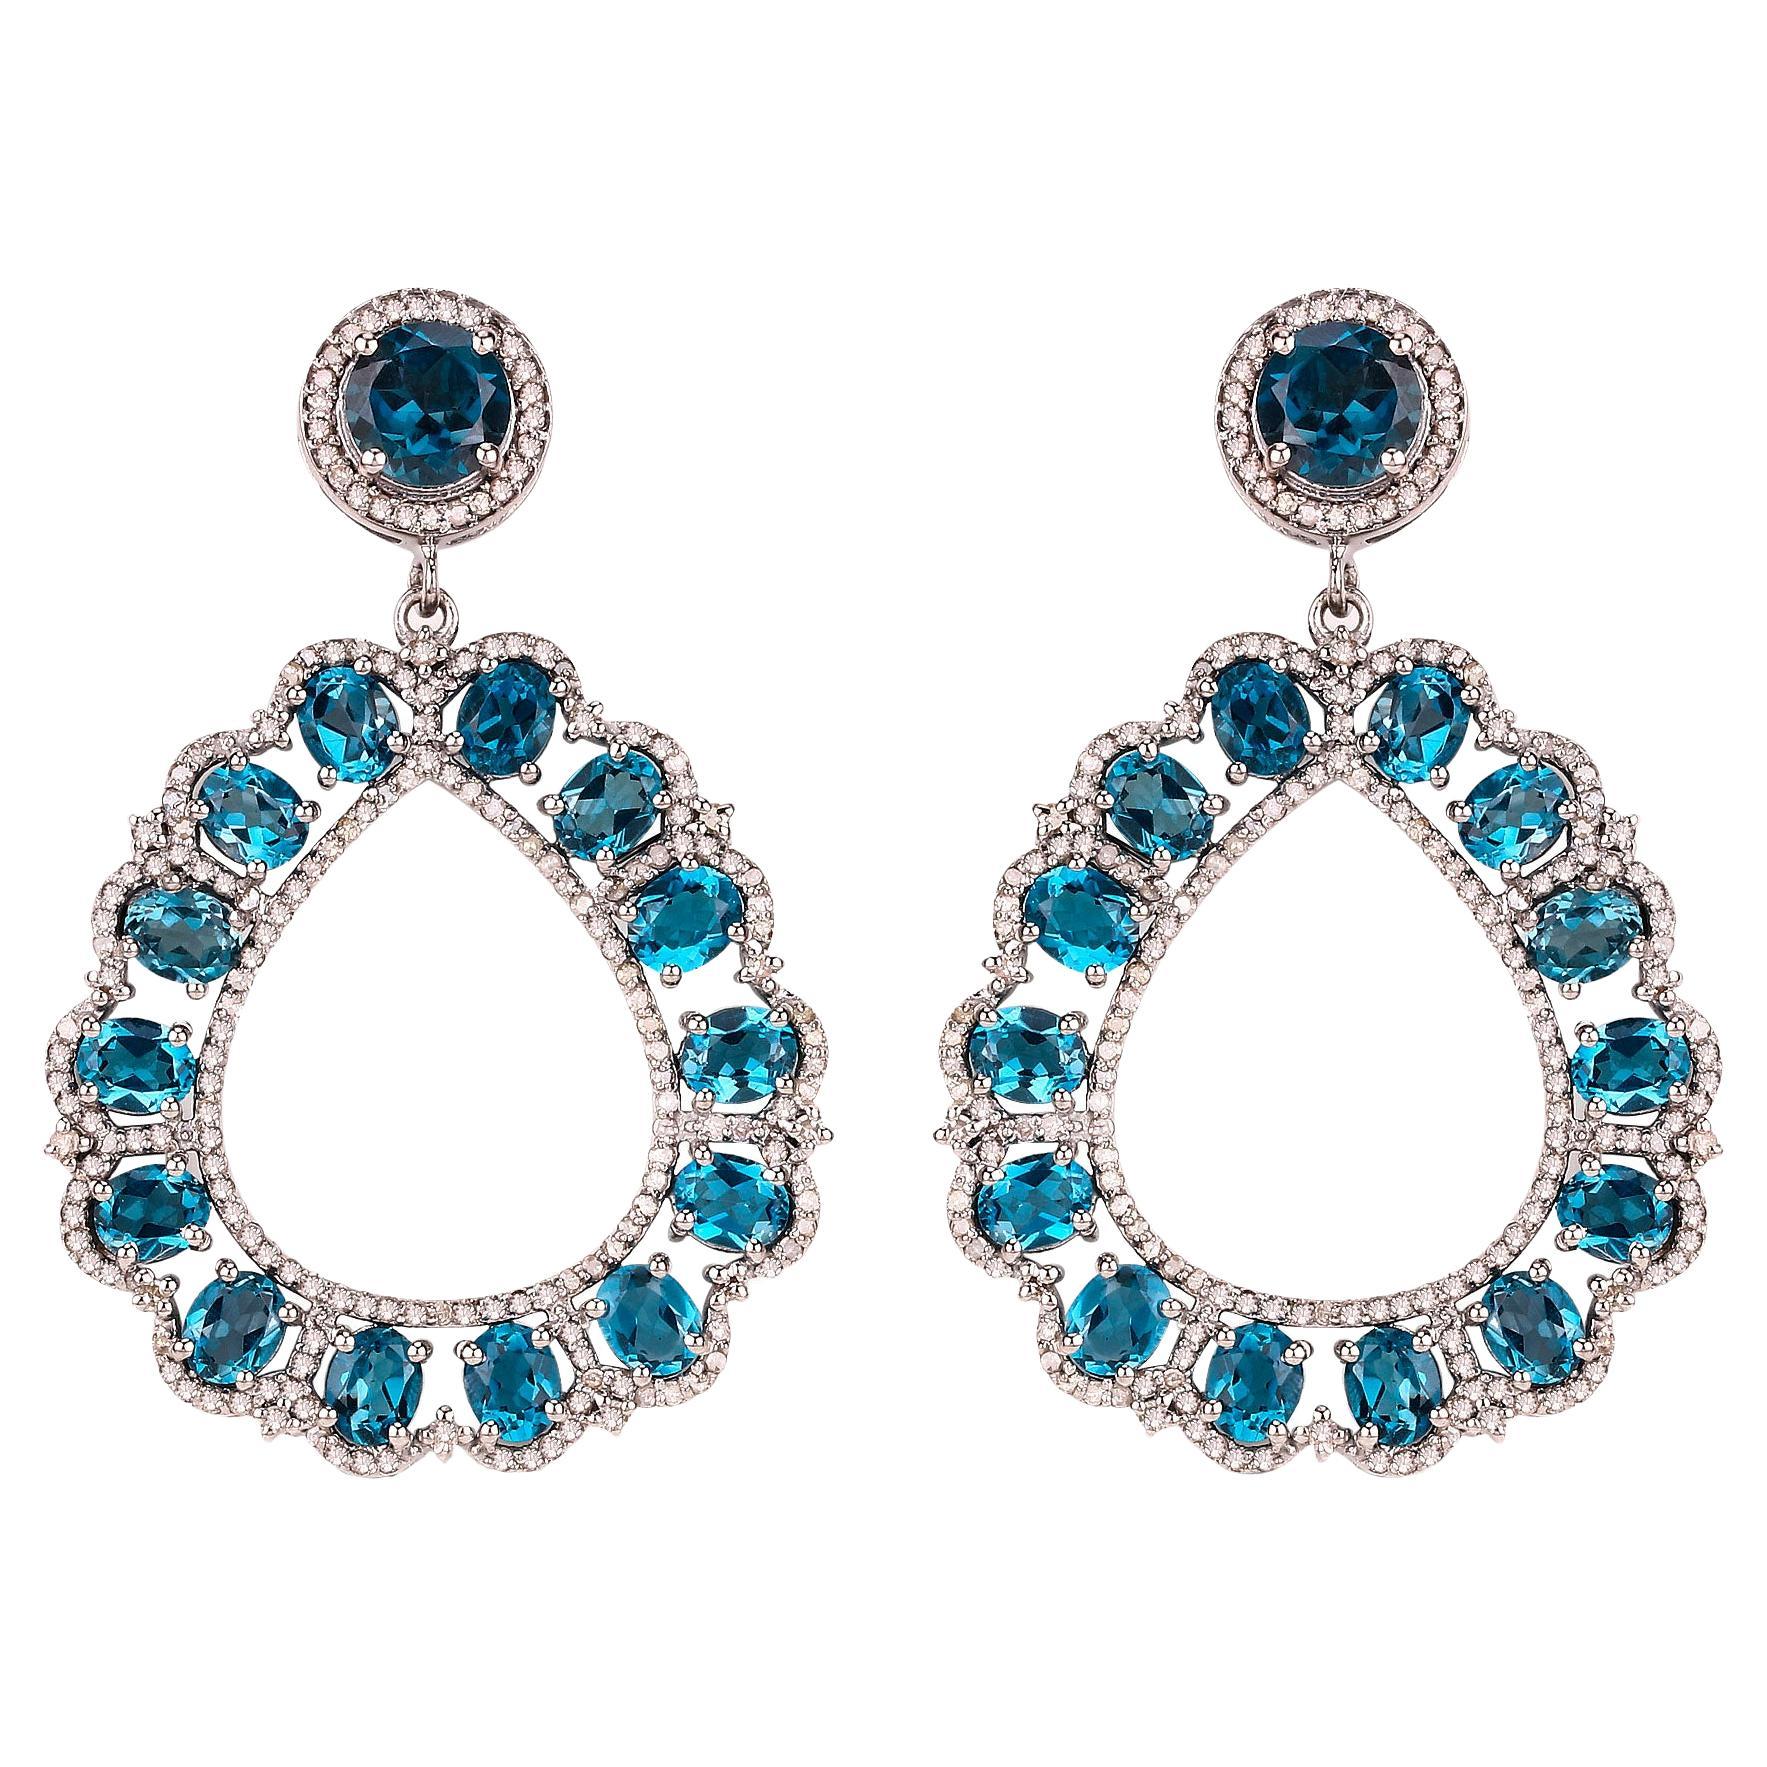 London Blue Topaz Dangle Earrings With Diamonds 15.52 Carats Sterling Silver